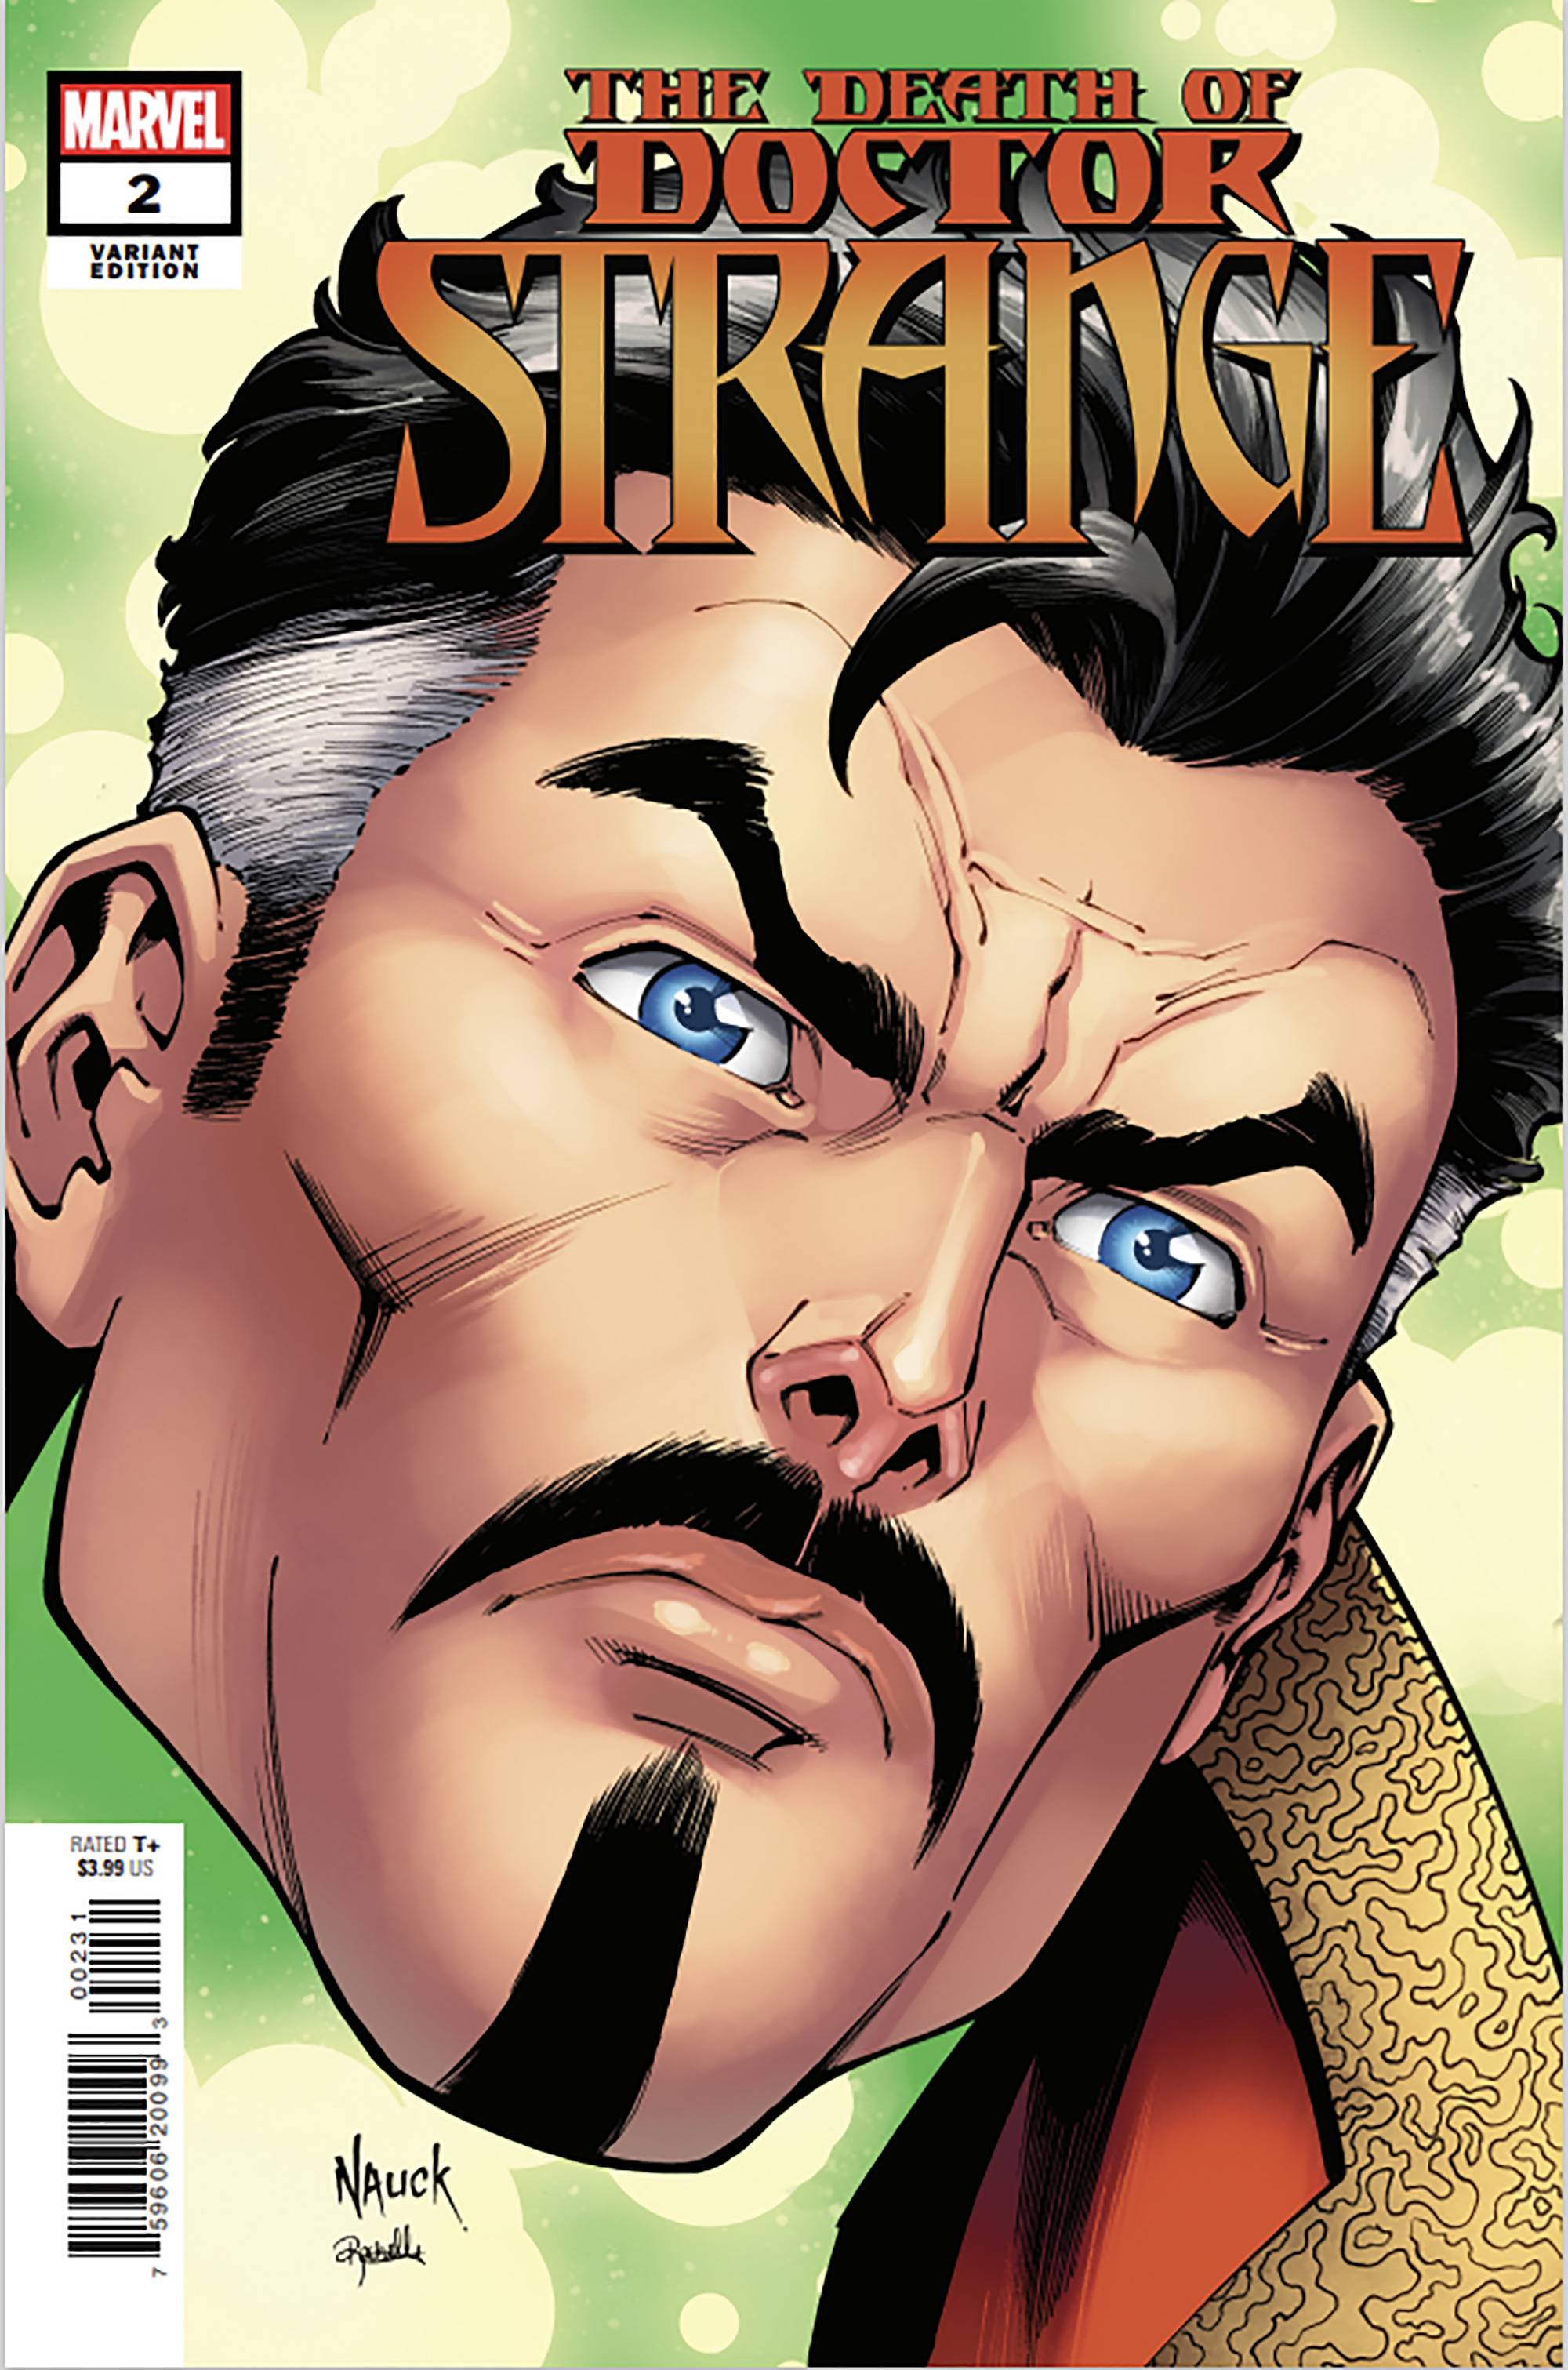 Death of Doctor Strange #2 varyant kapağı